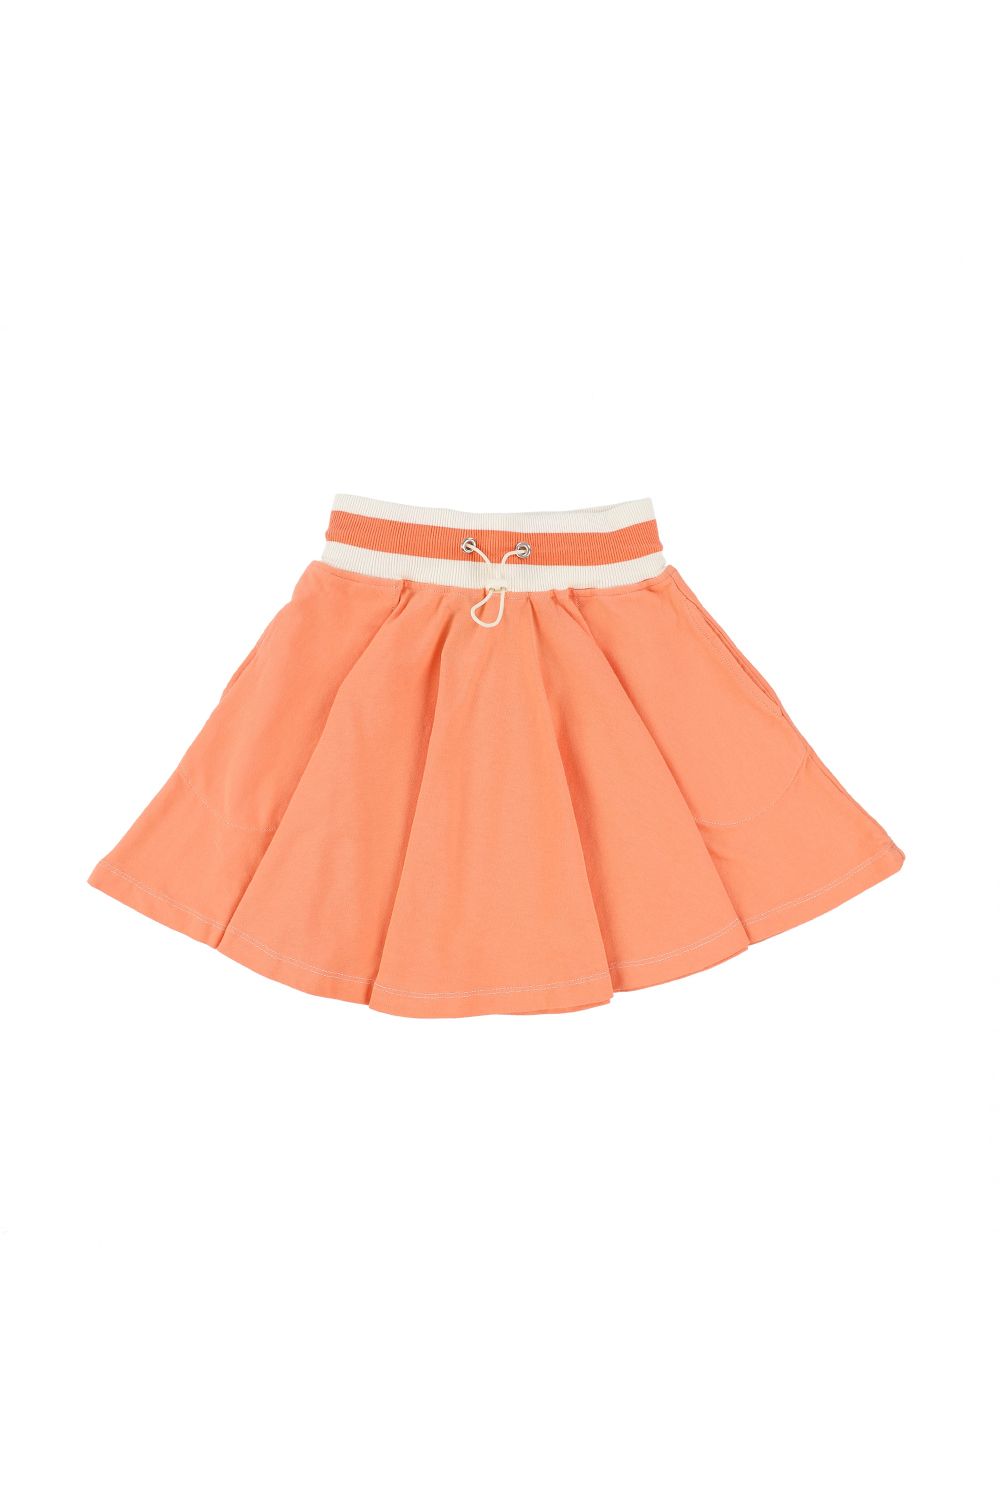 Coral Rodas Skirt